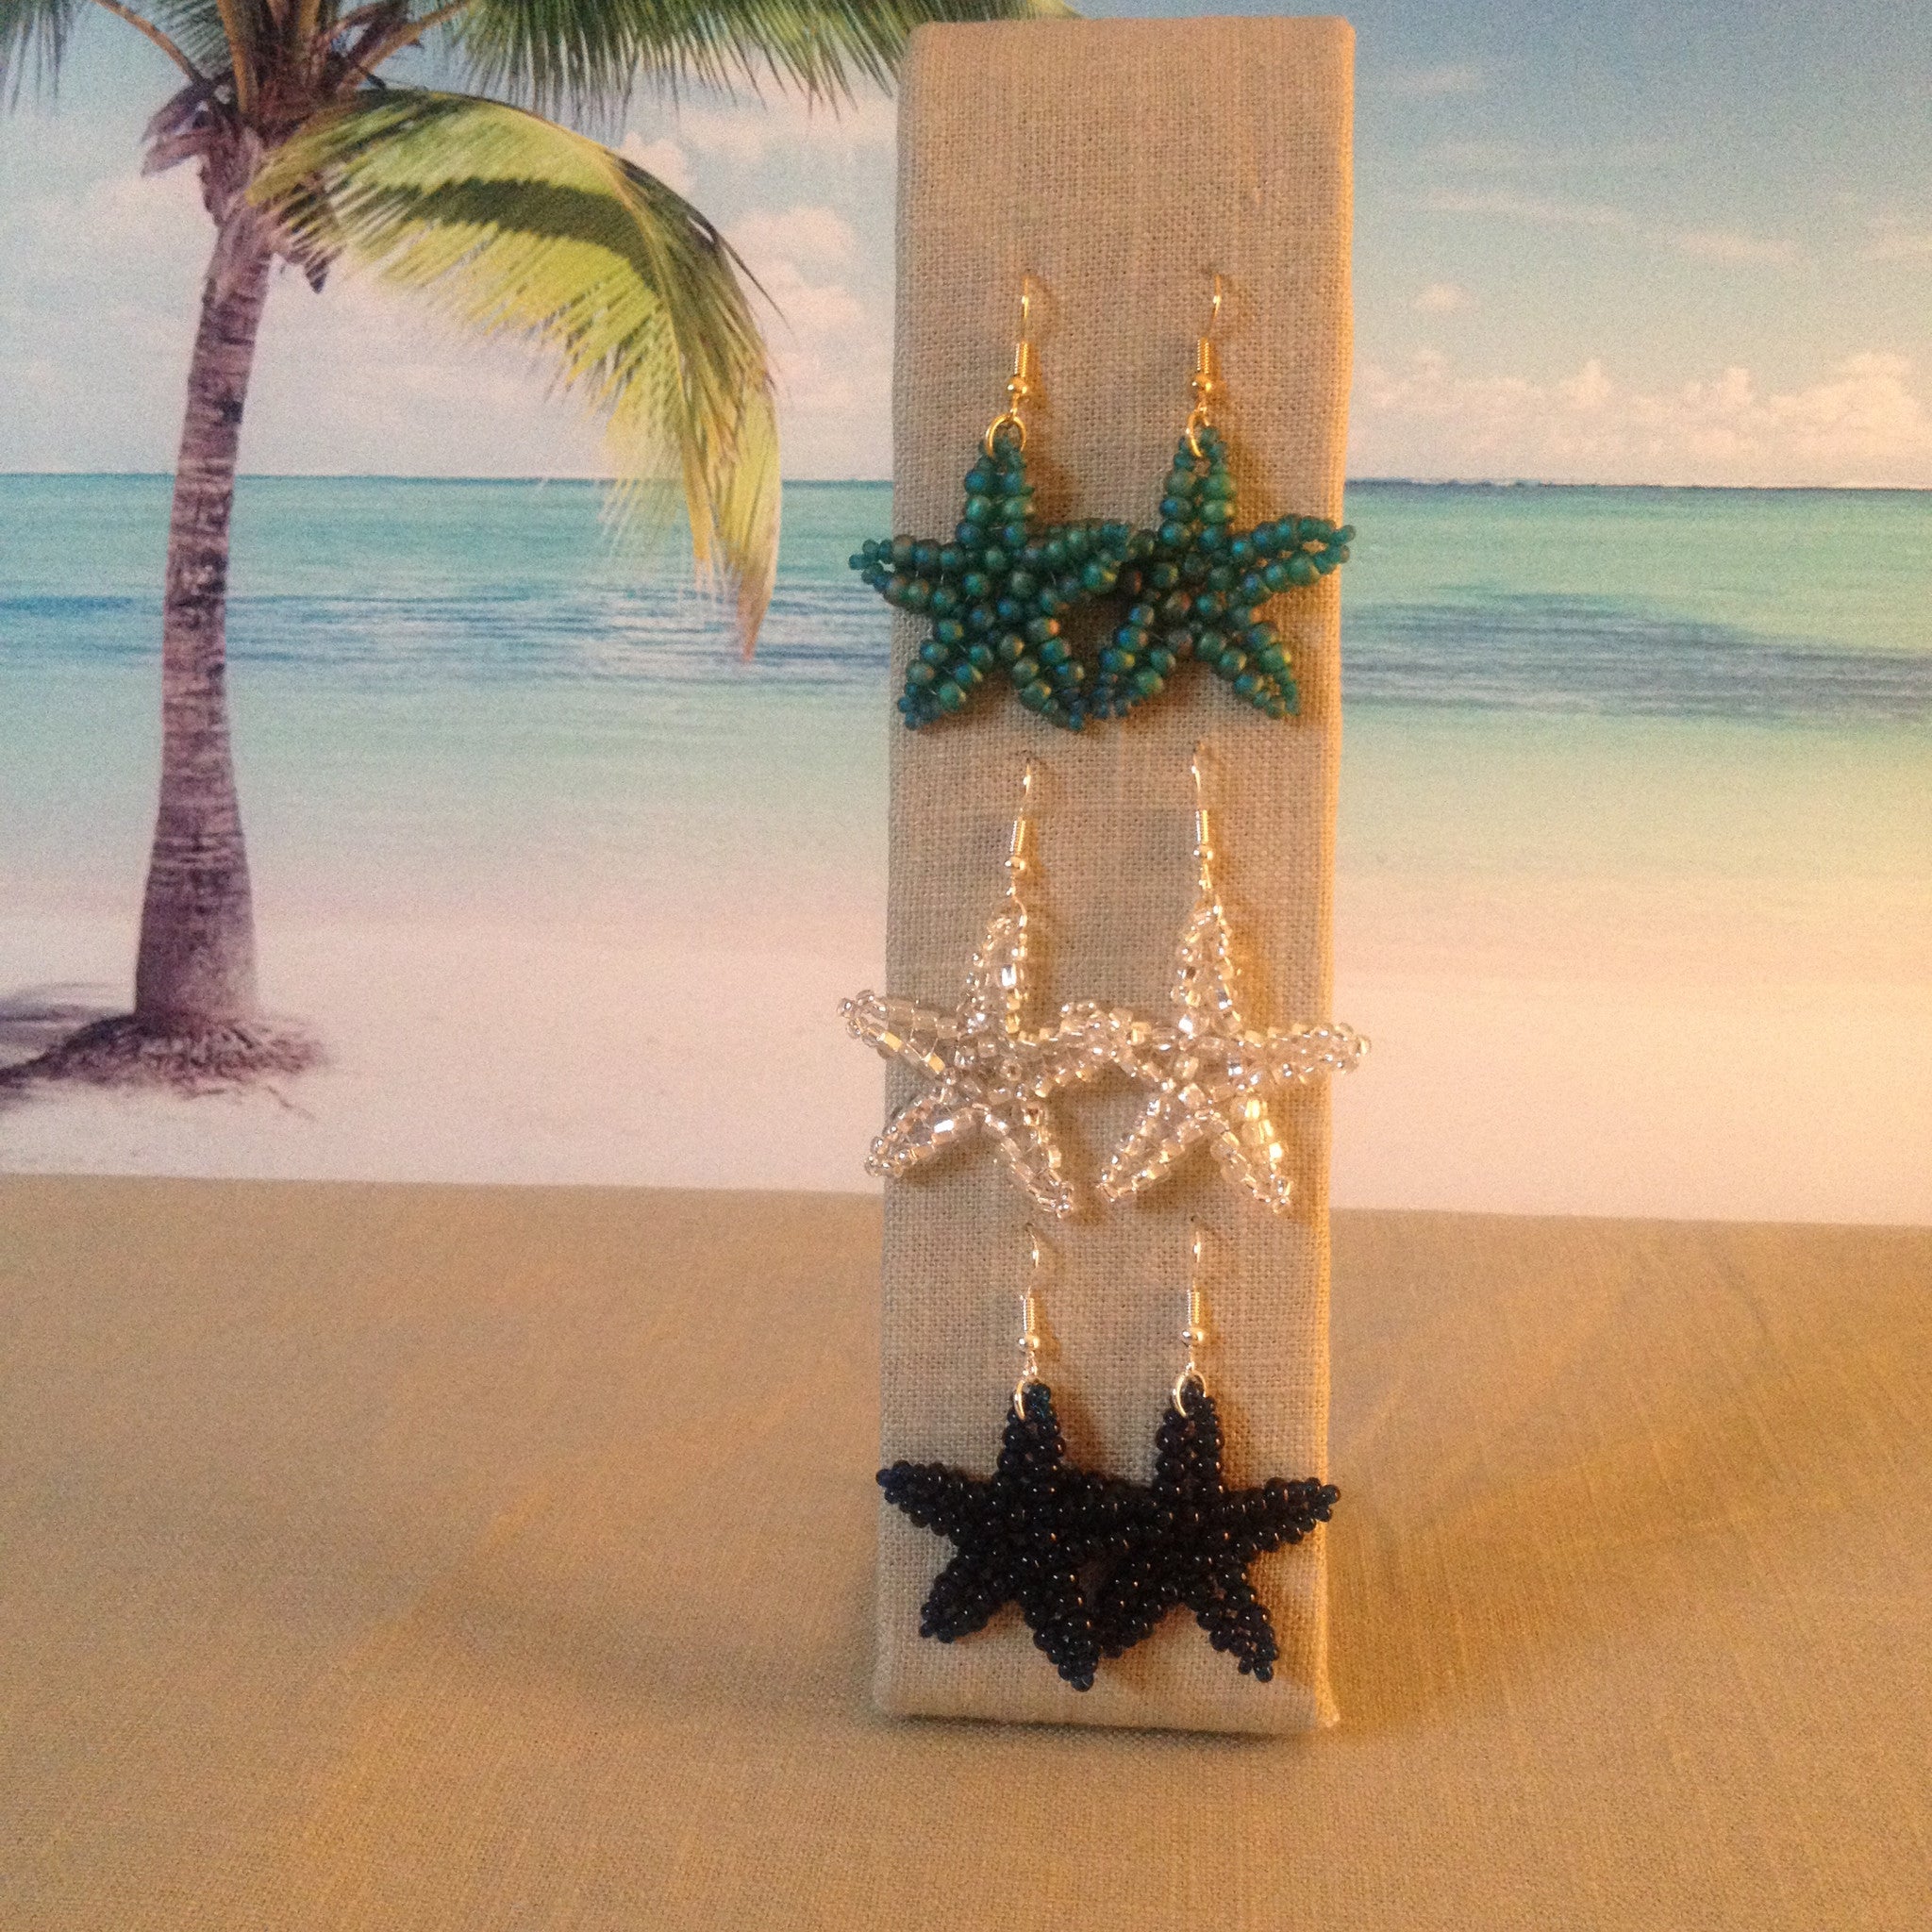 Starfish beaded handmade earrings in green crystal navy resort cruise wear fun beachy style